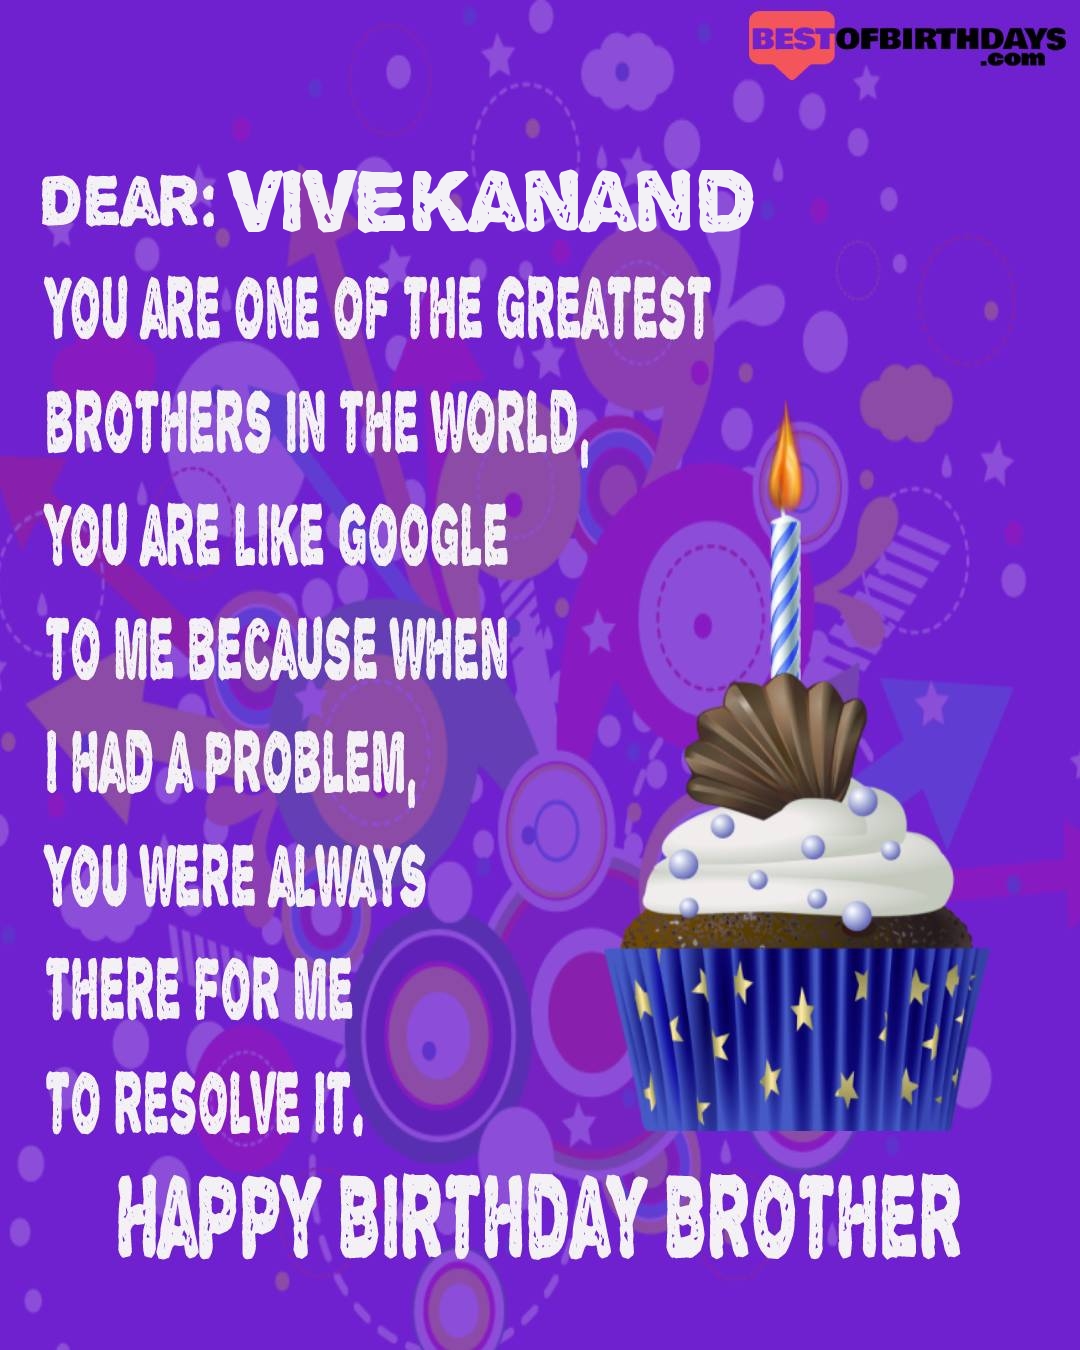 Happy birthday vivekanand bhai brother bro